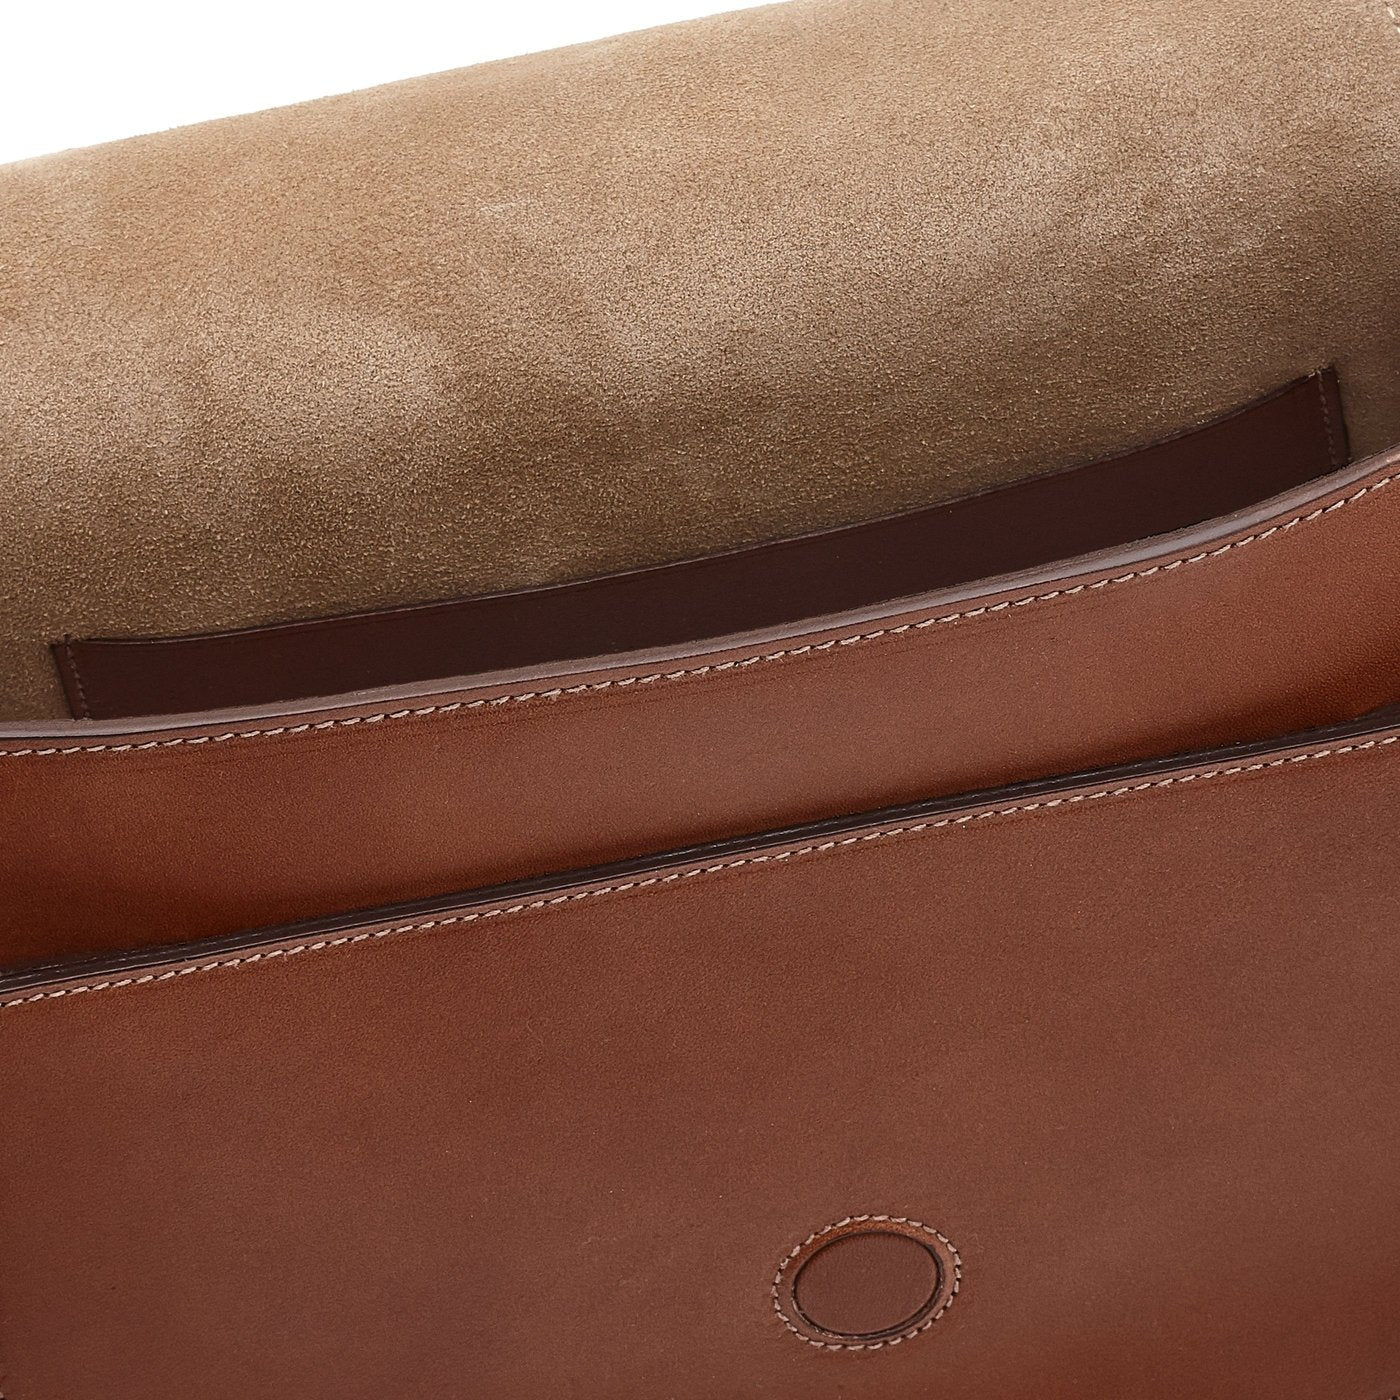 Loop | Women's crossbody bag in leather color chocolate